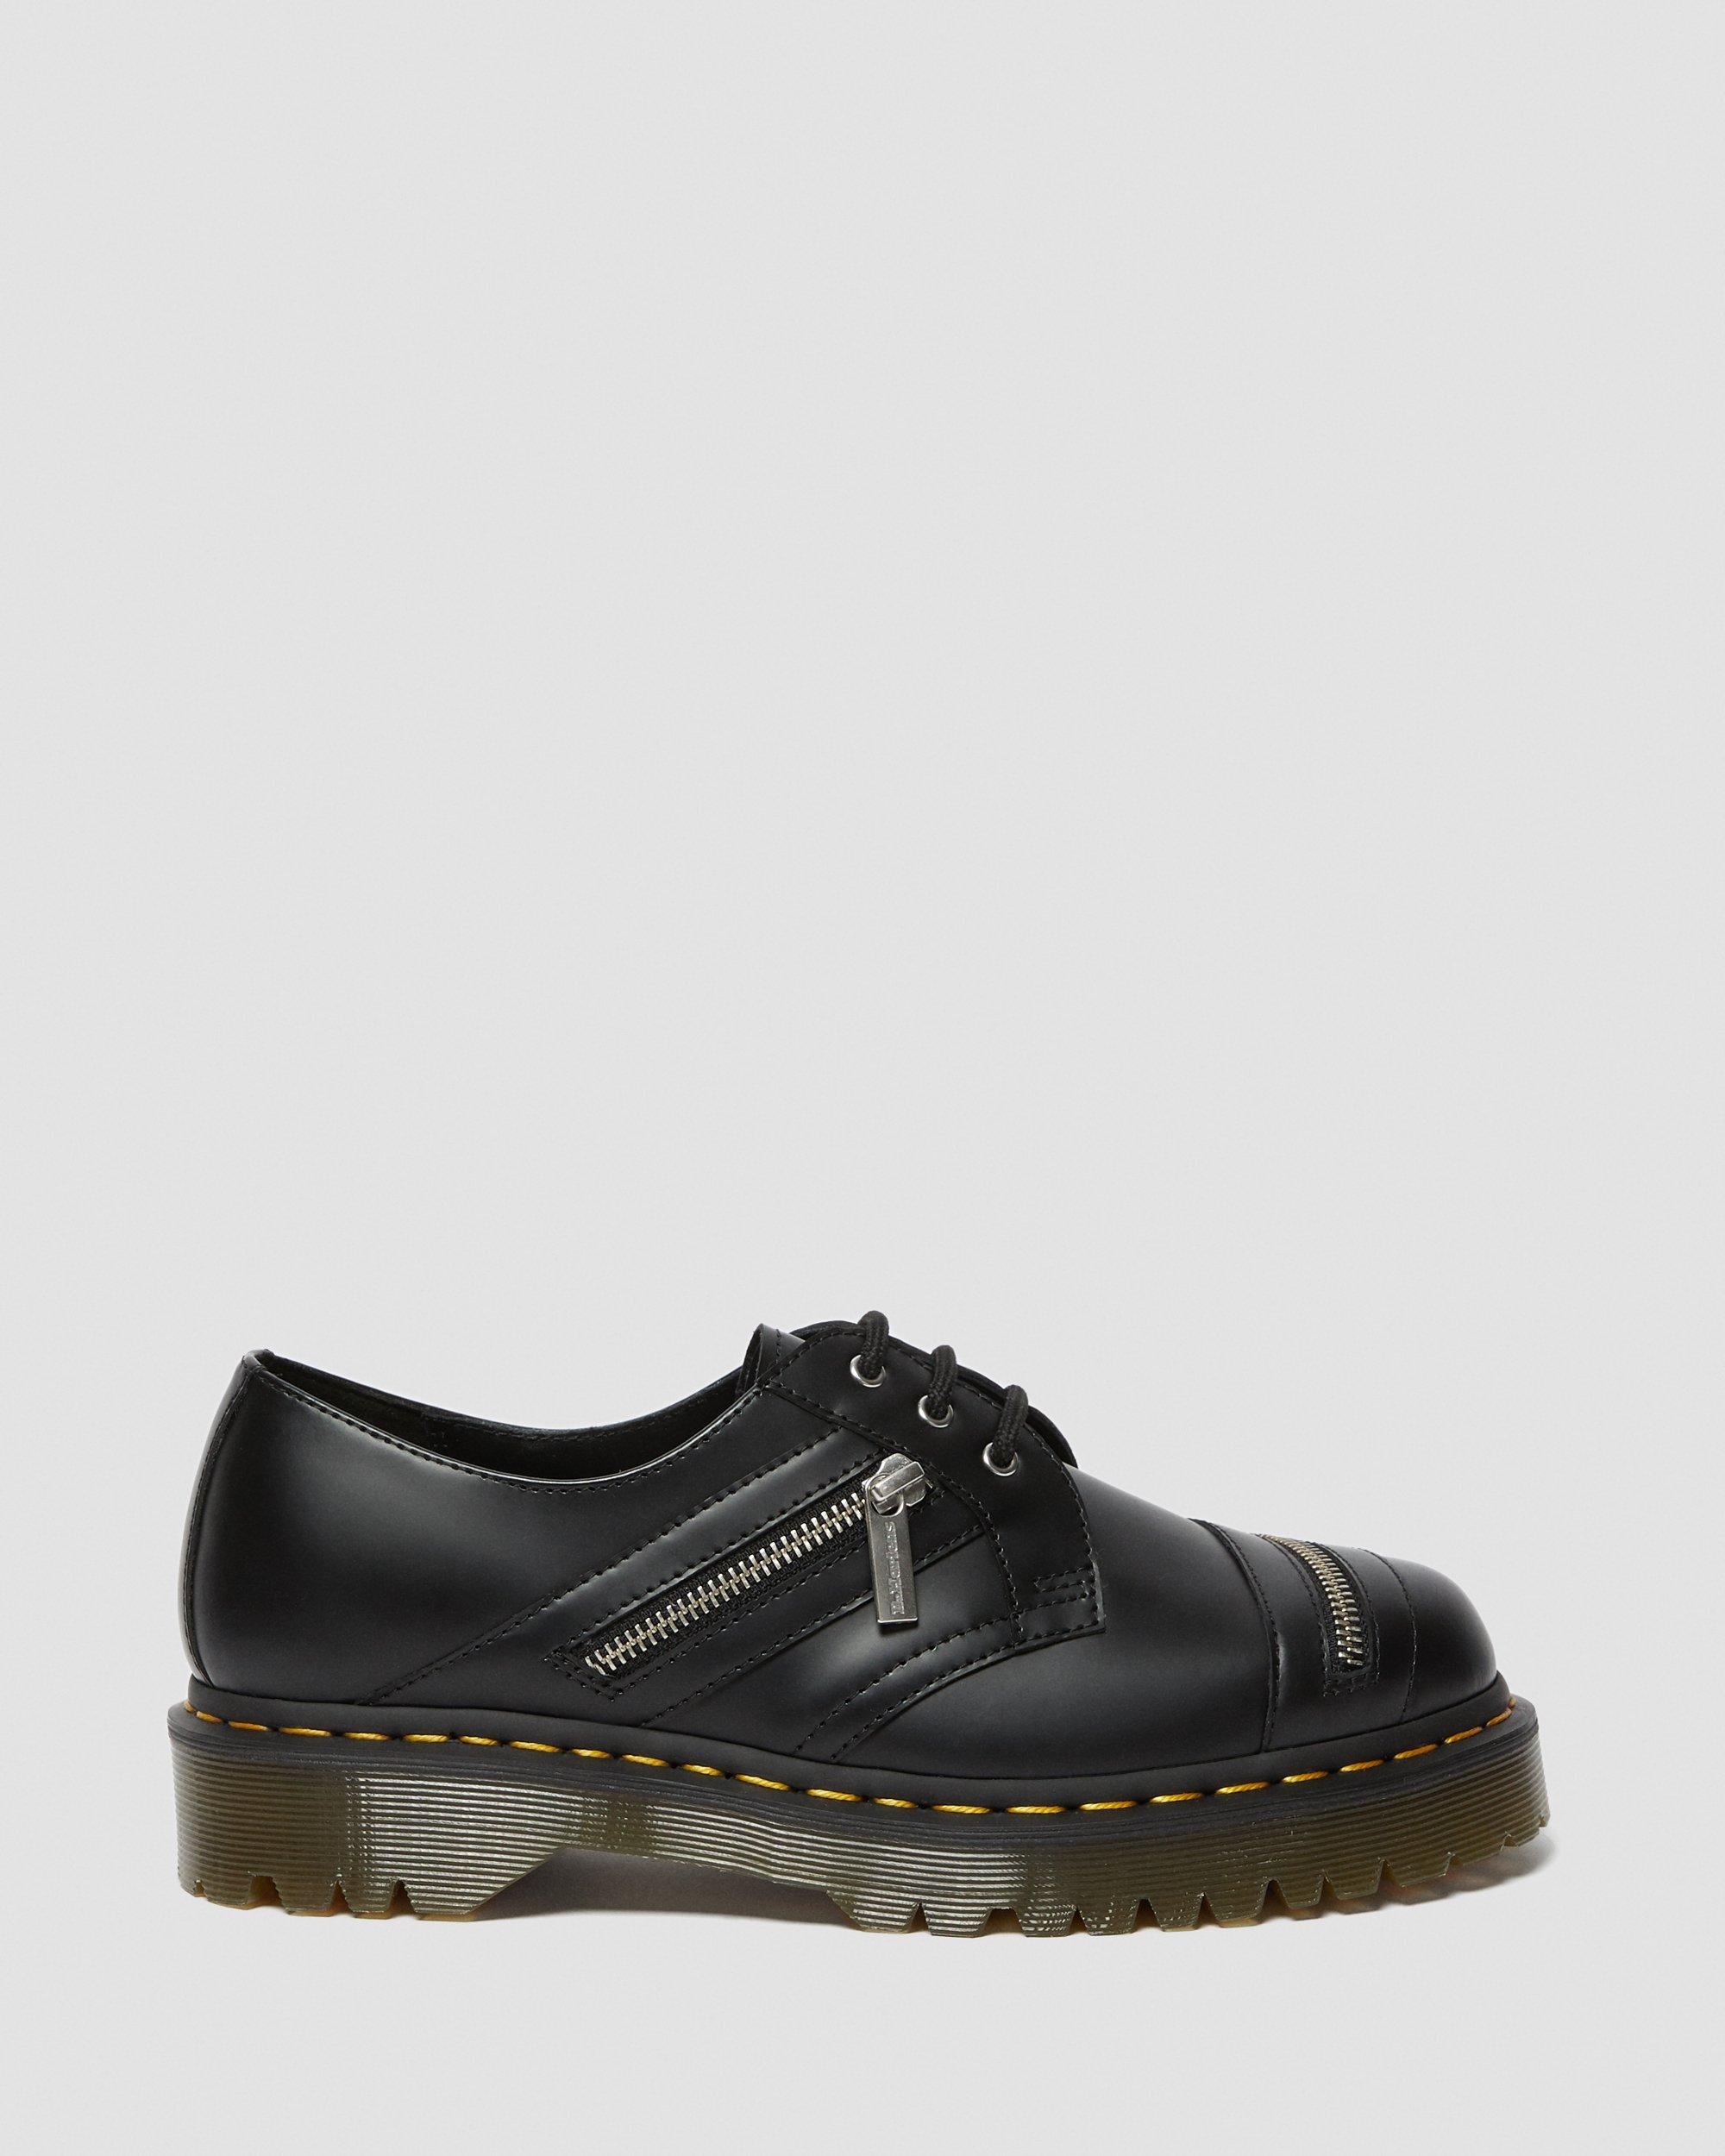 DR MARTENS 1461 Bex Zip Leather Shoes